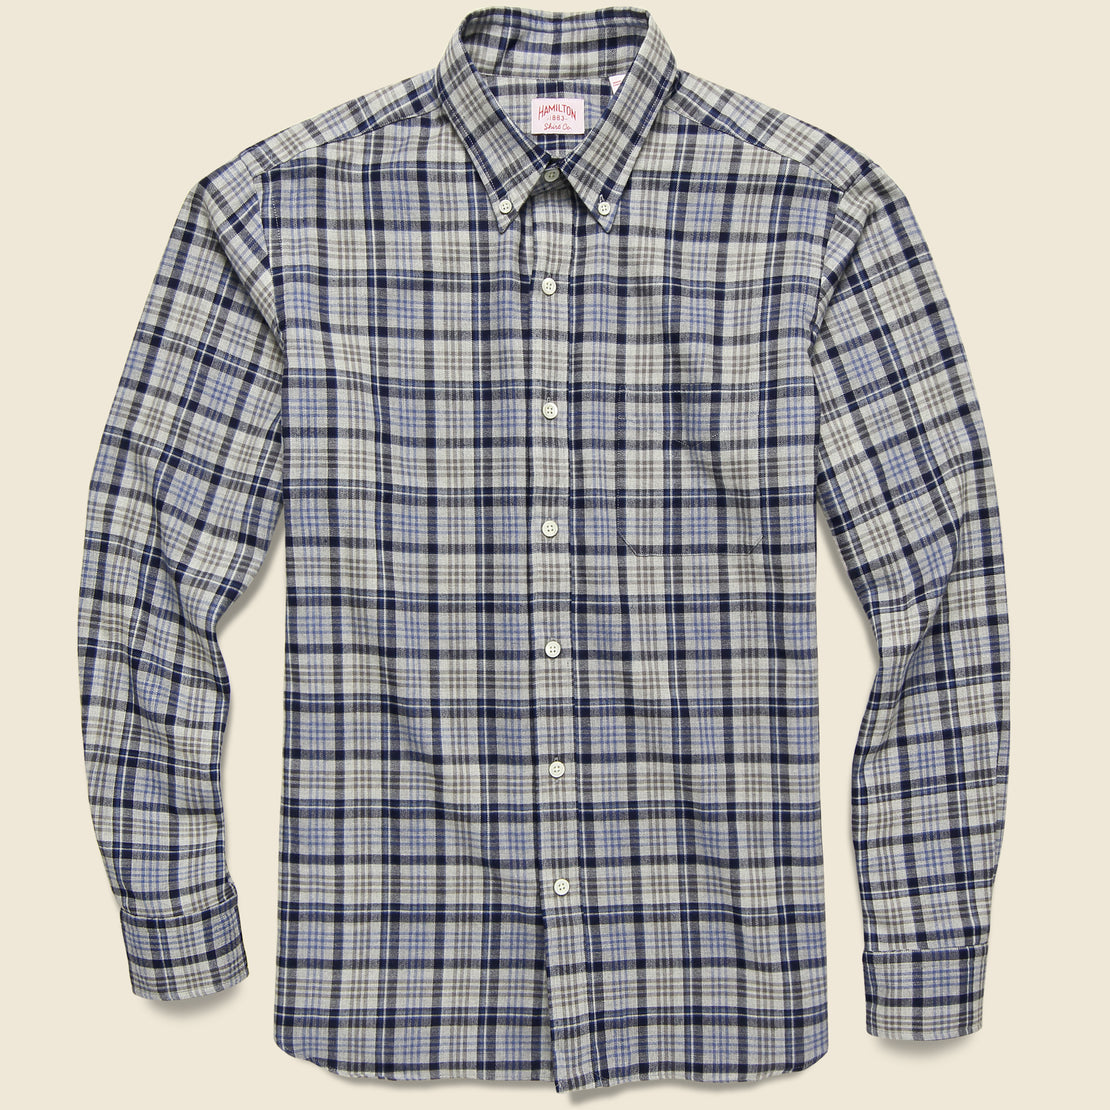 Hamilton Shirt Co. Plaid Flannel - Navy/Grey